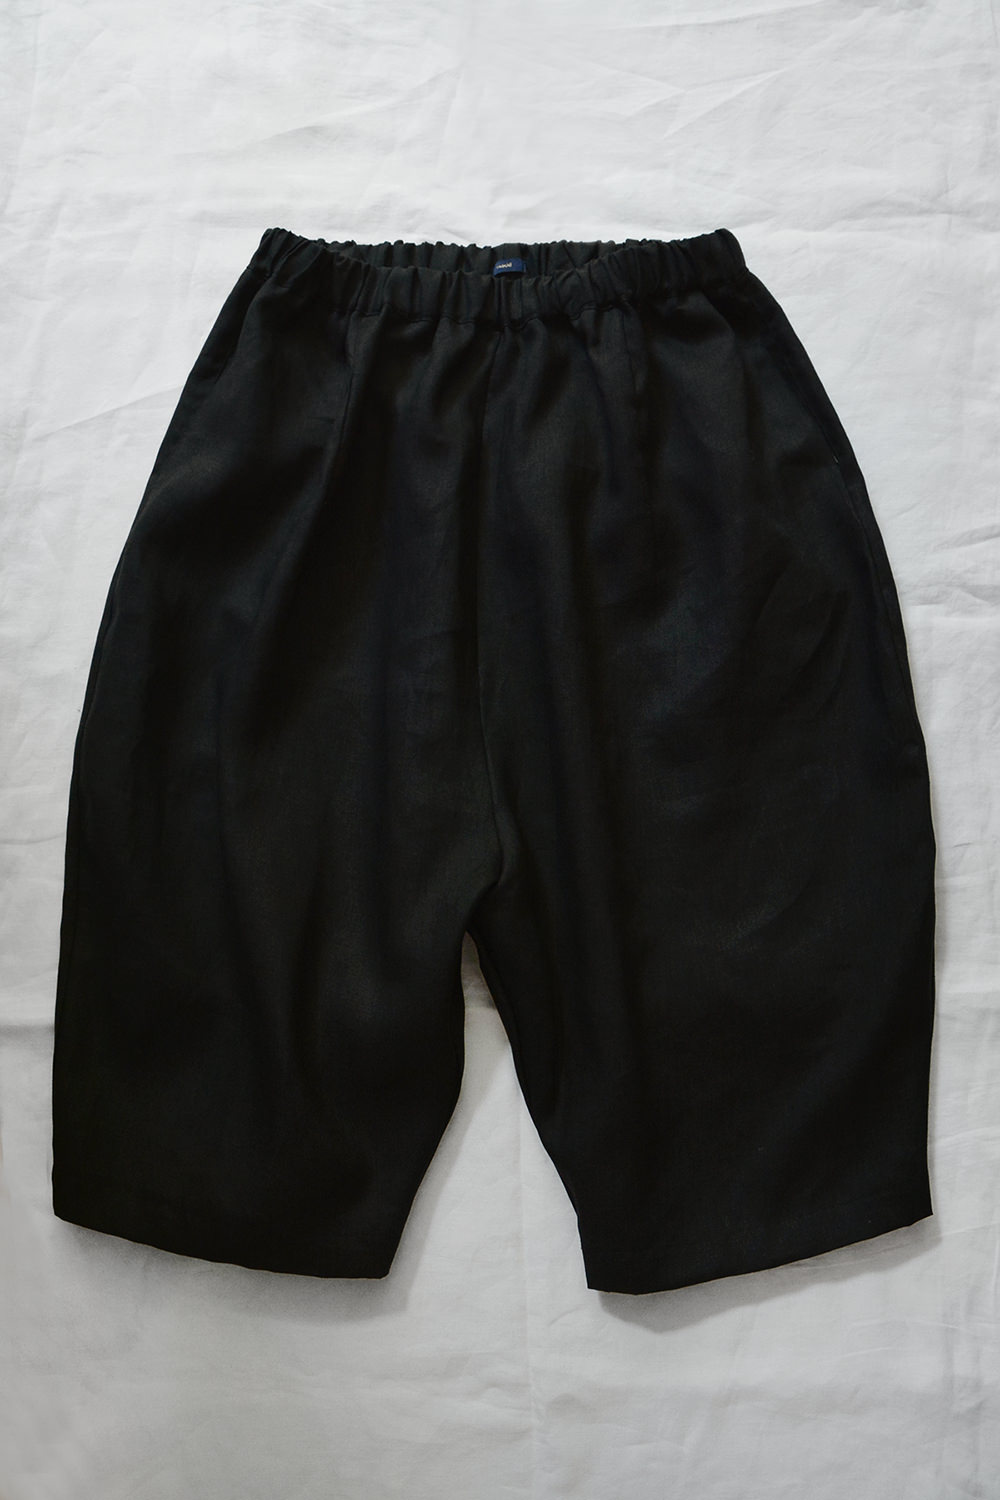 Makie - Women's Three Quarter Linen Pants Vicky - Black - laid flat